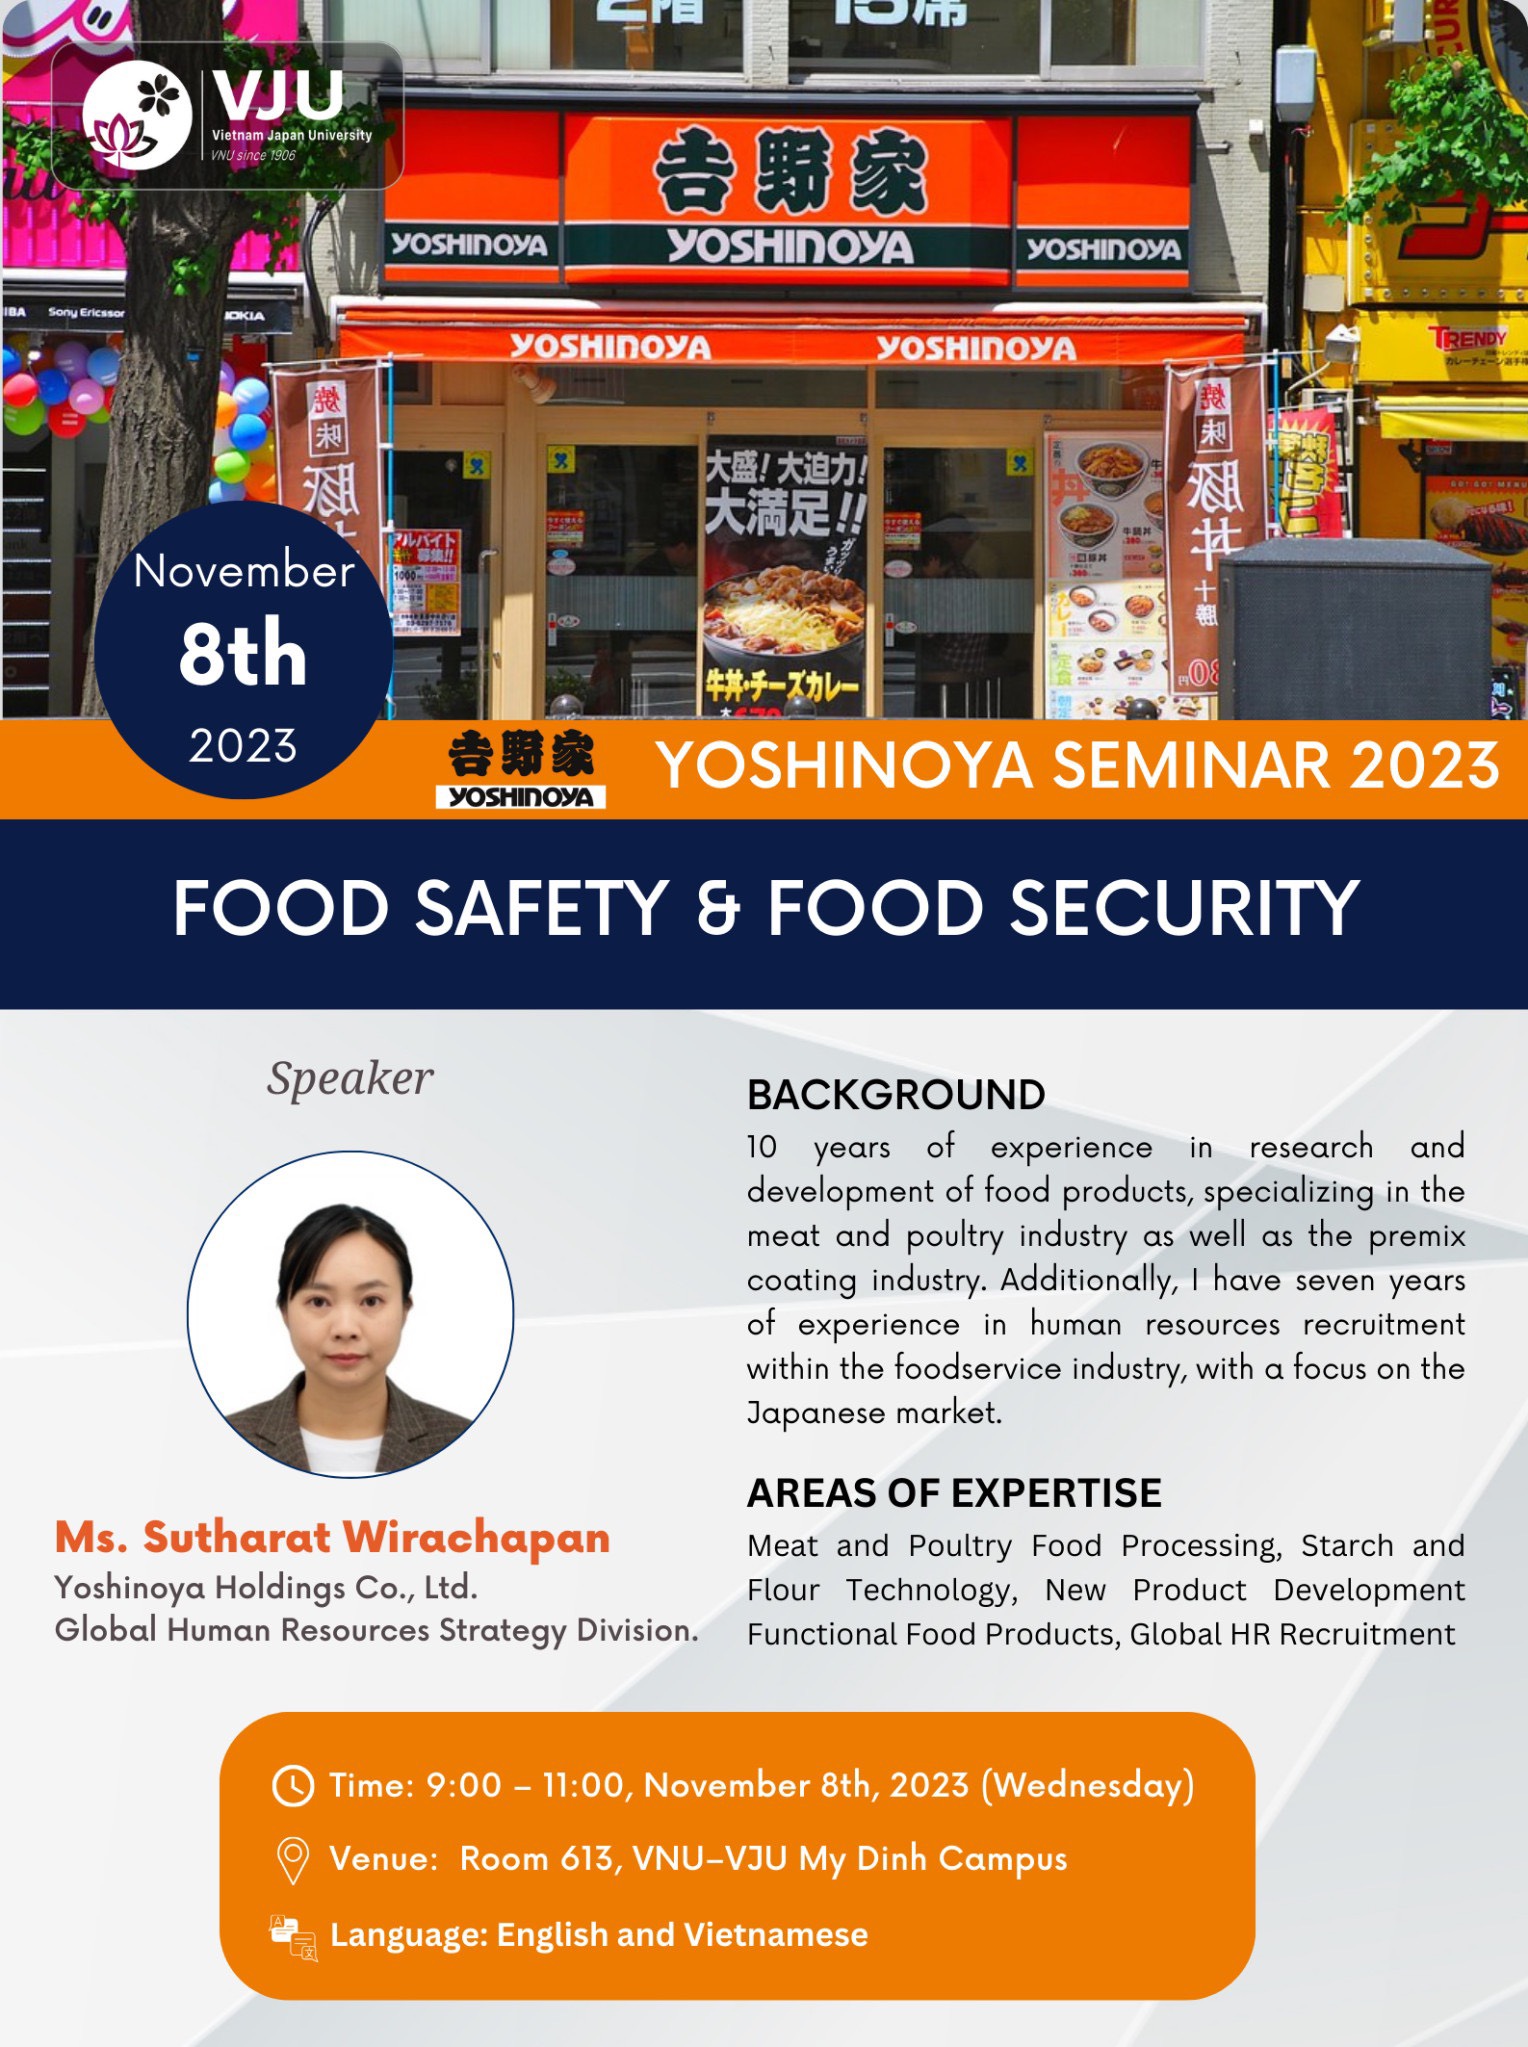 YOSHINOYA Seminar 2023: Food safety & Food security